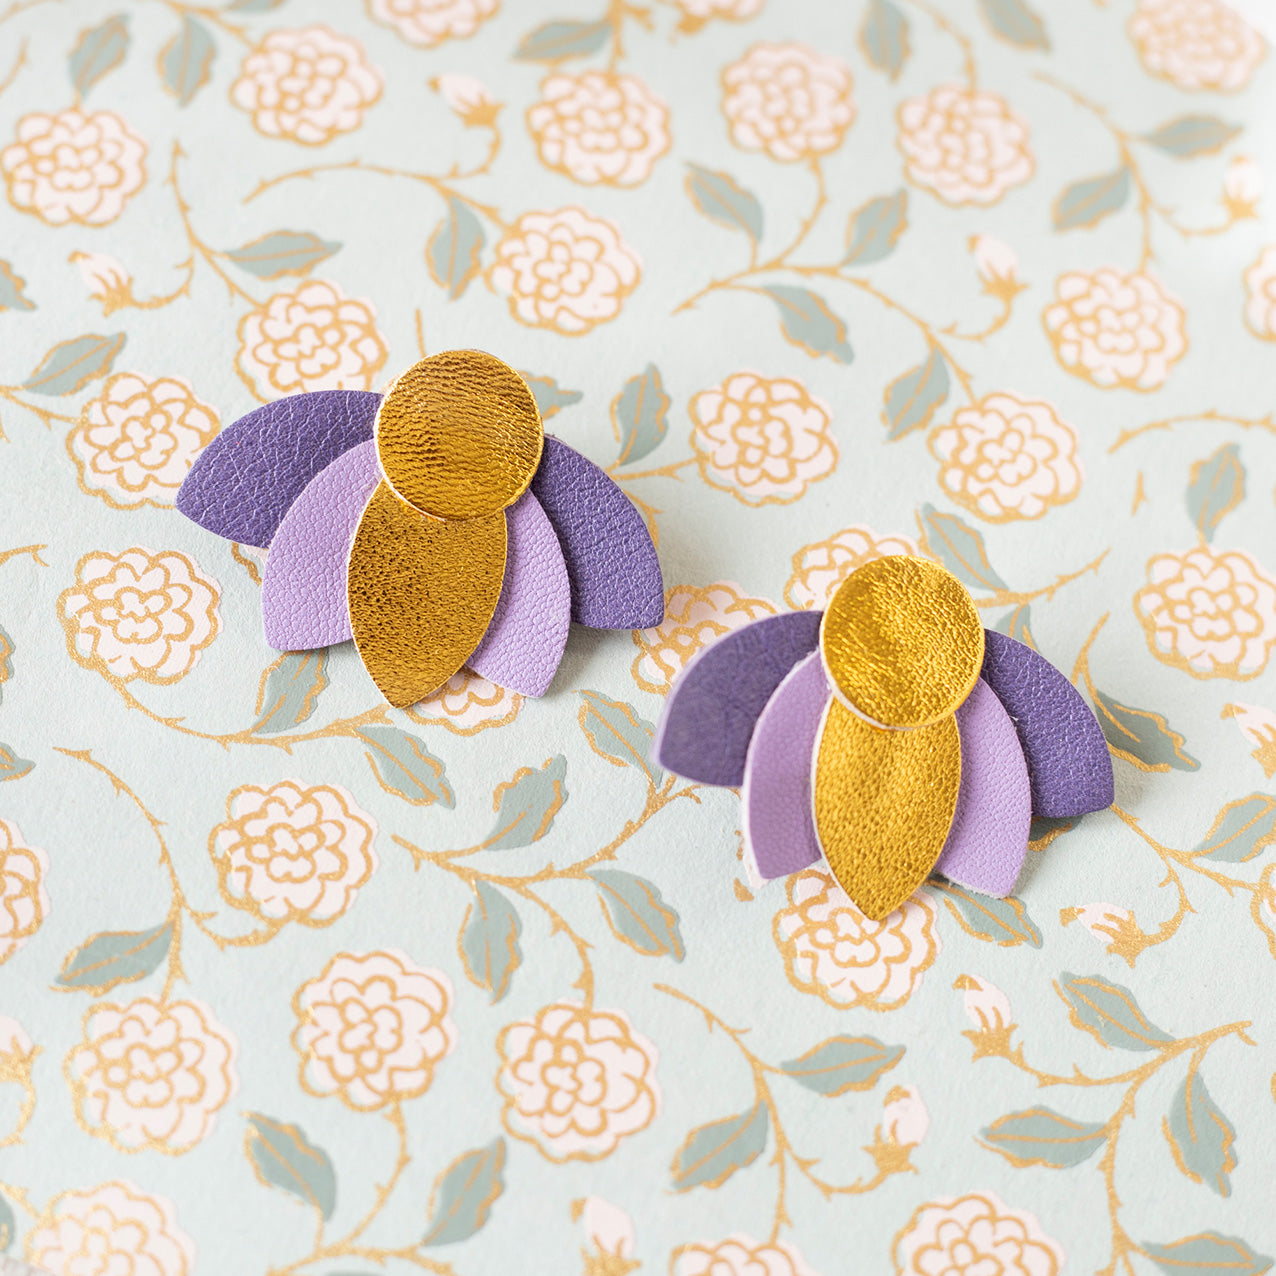 Large Lotus Flower stud earrings - gold, purple and amethyst purple